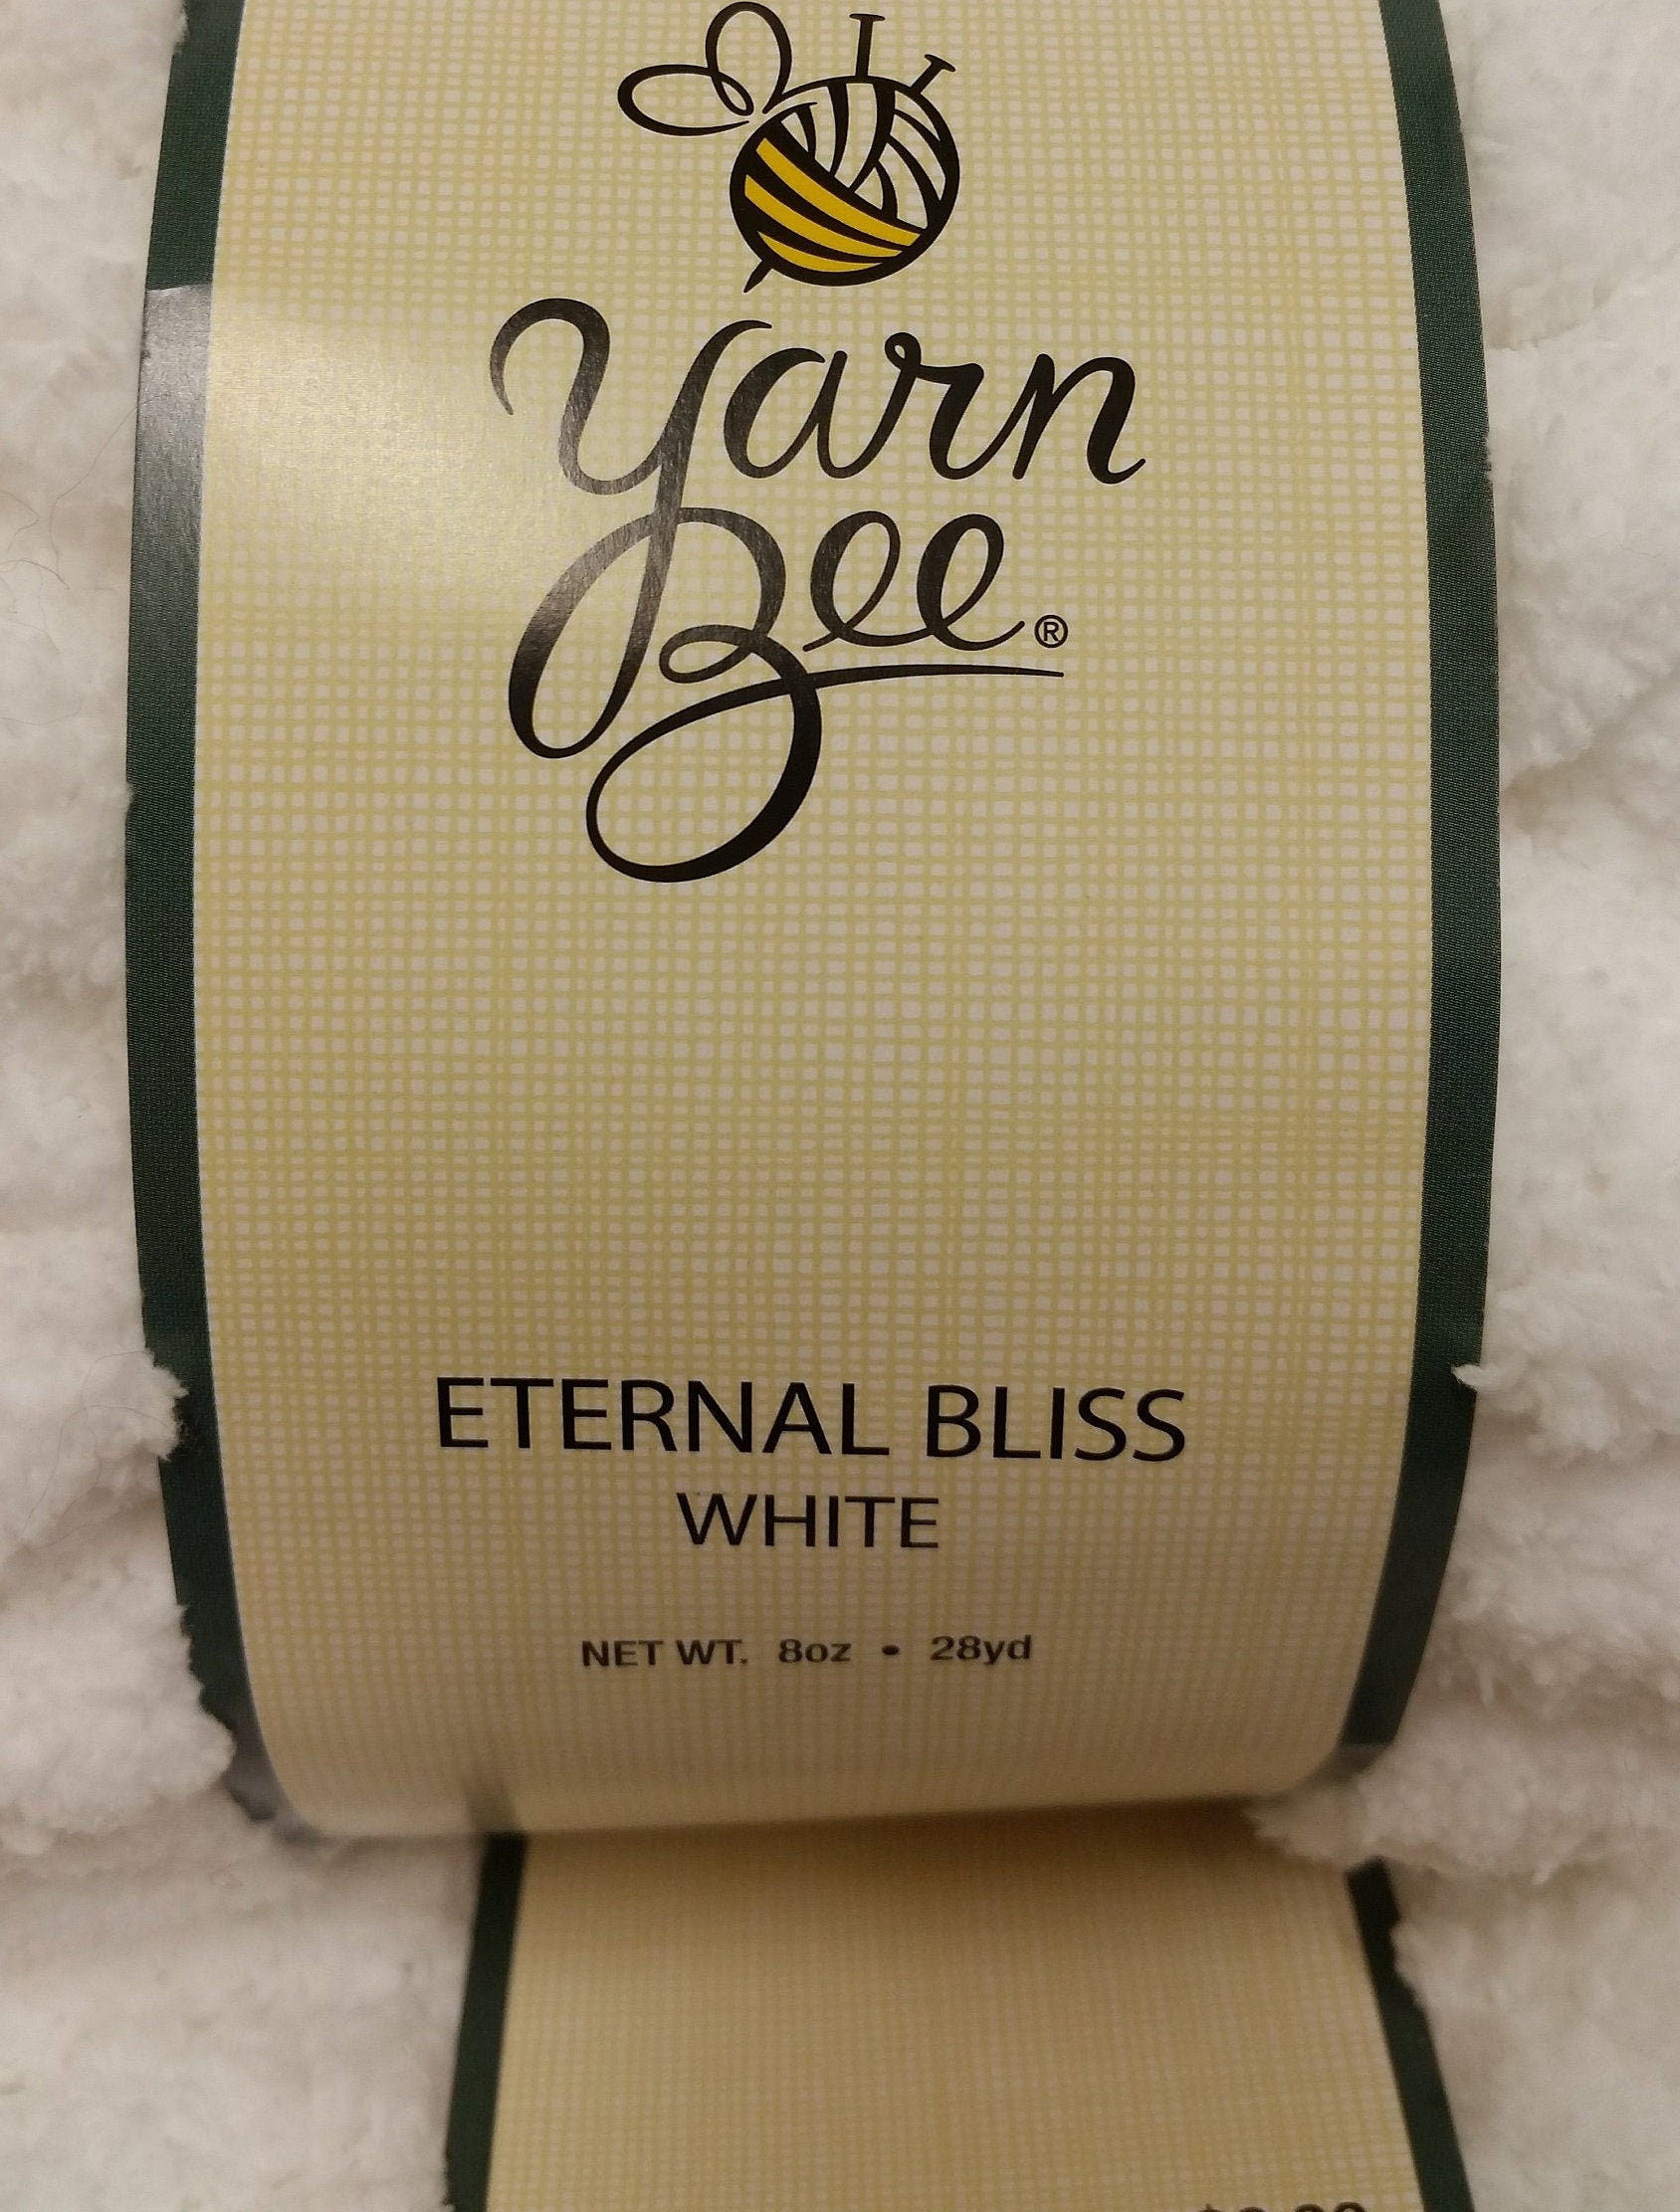 Hobby Lobby yarn bee eternal bliss …